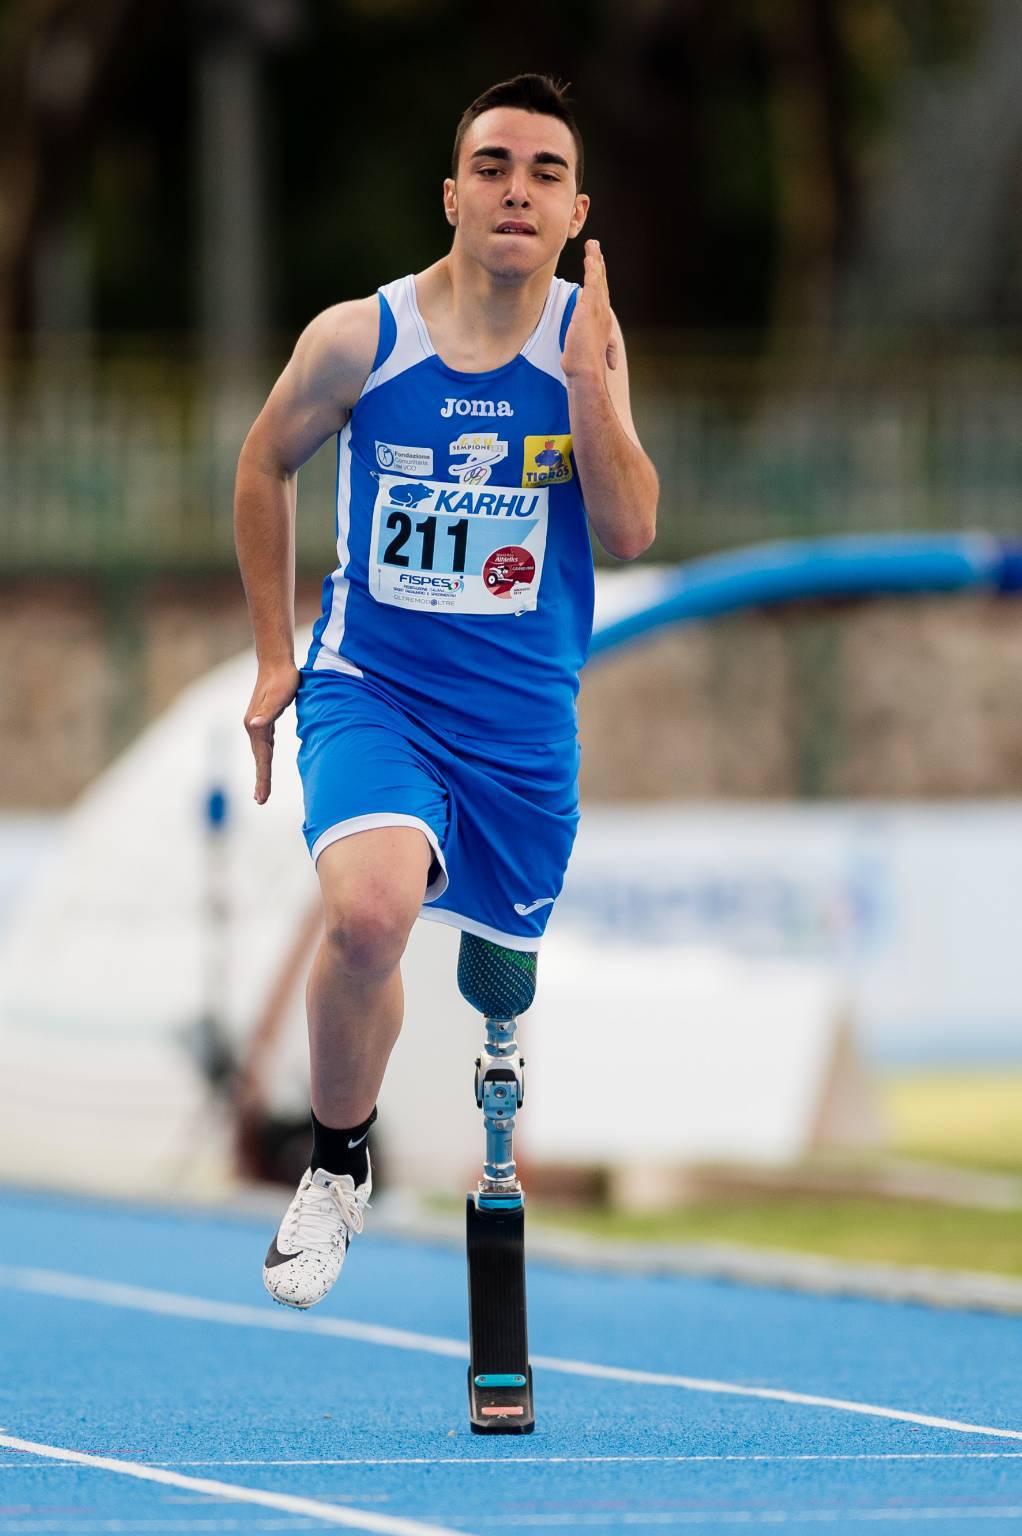 Atletica paralimpica, Marcantognini record mondiale nei 400